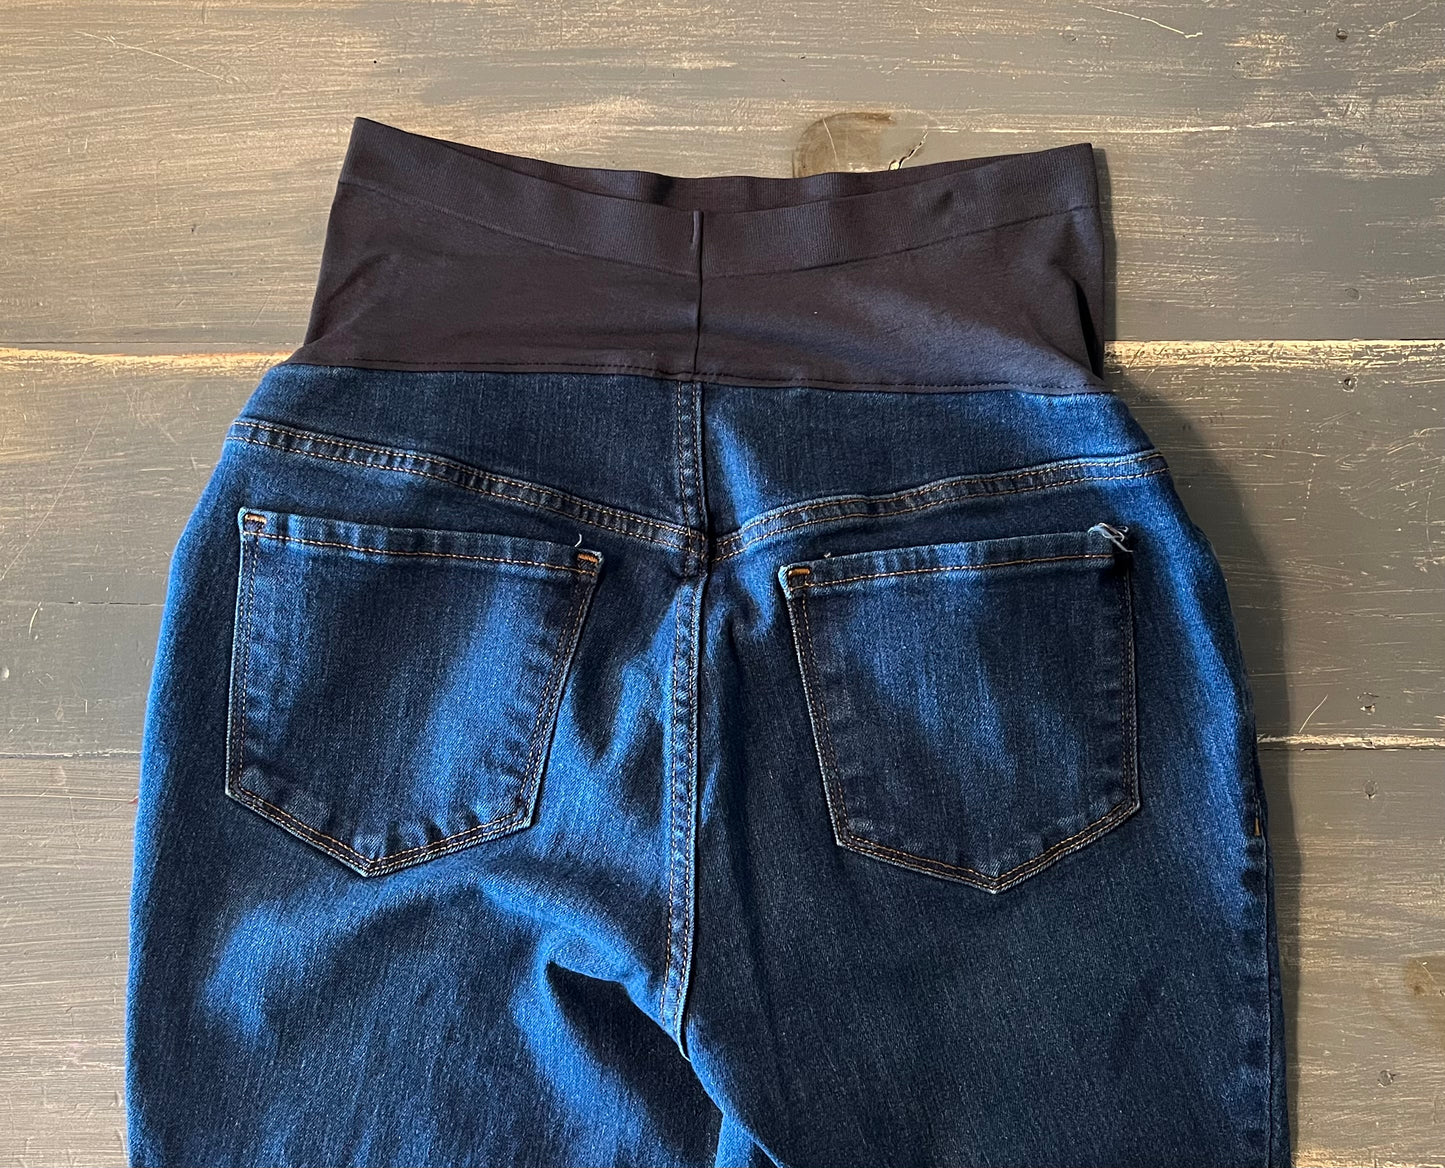 Full panel 26” skinny jeans, Dark wash